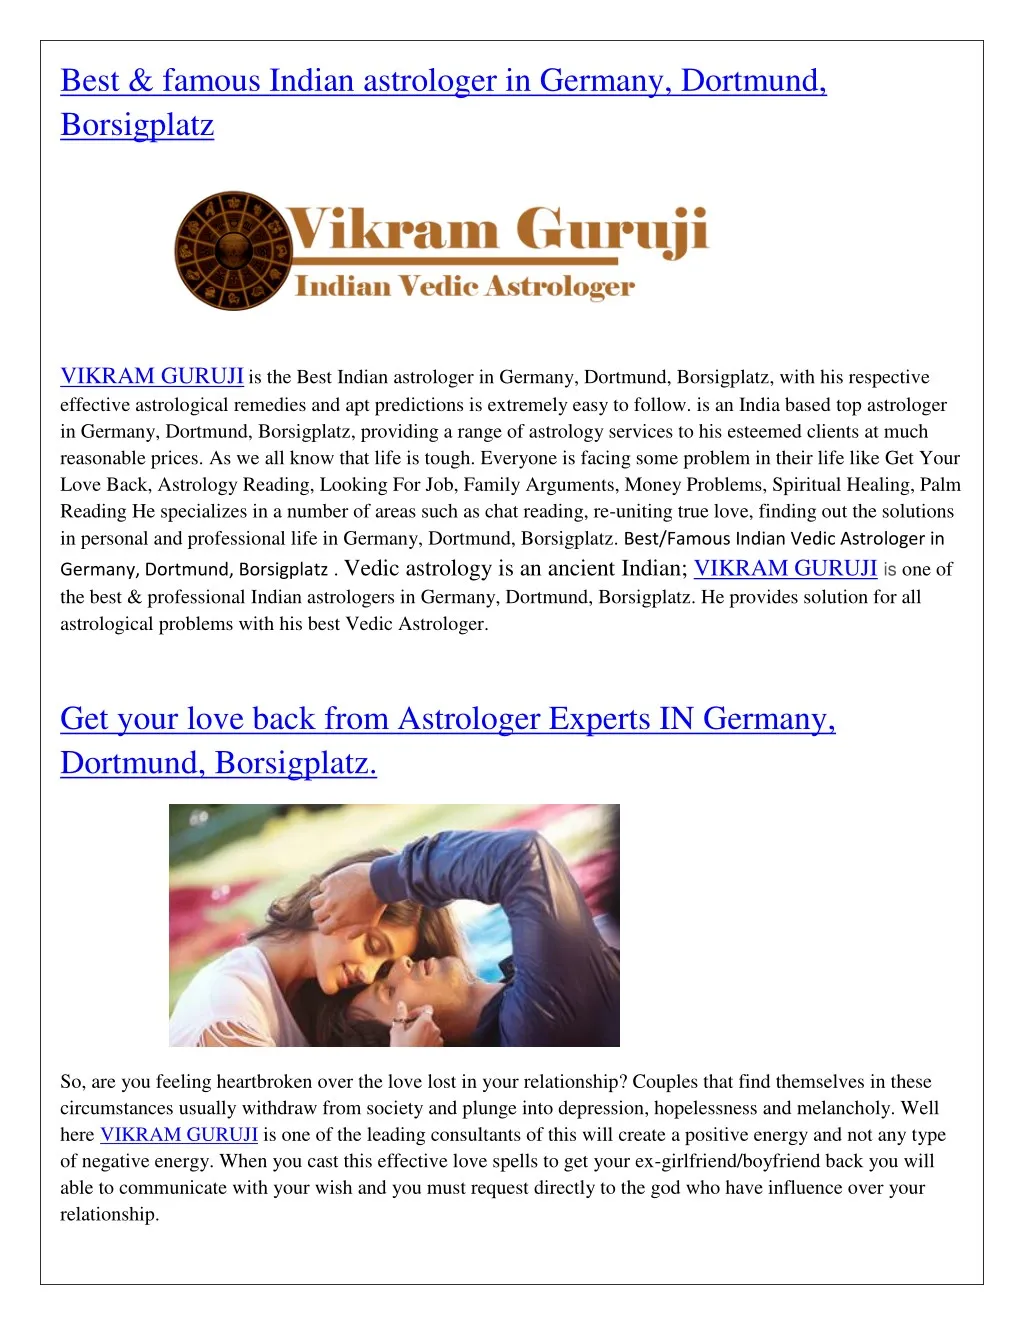 best famous indian astrologer in germany dortmund